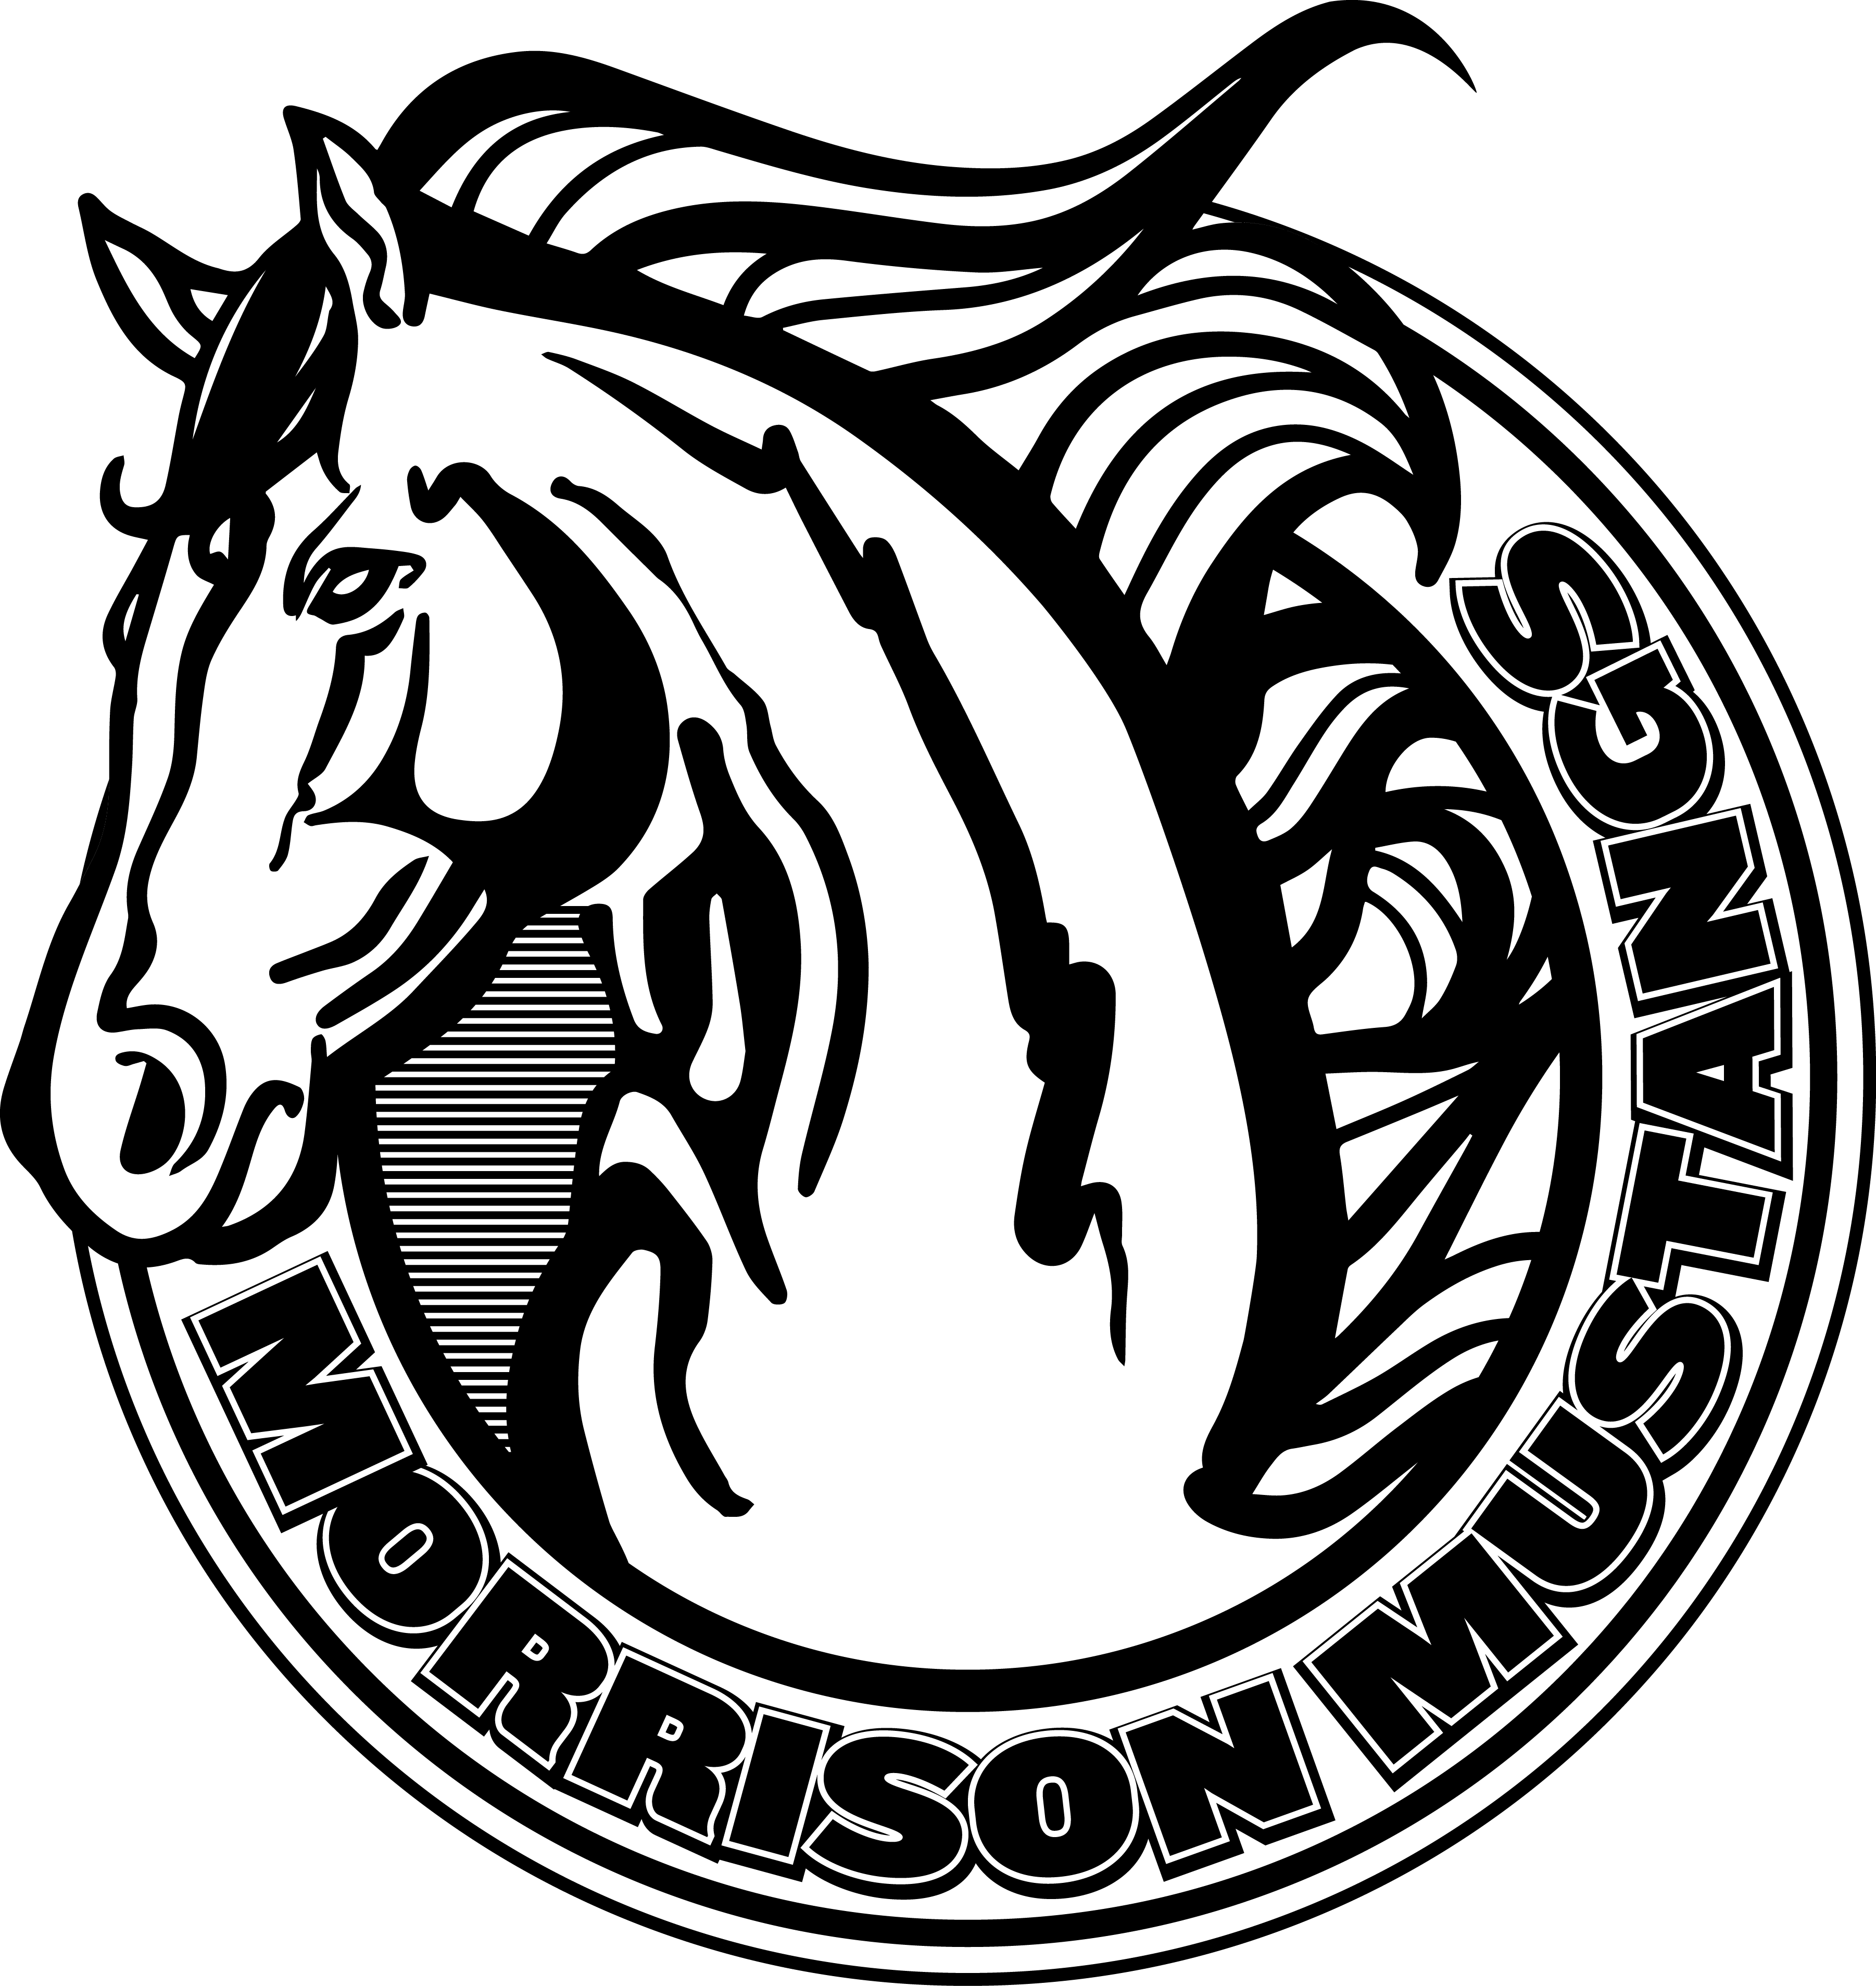 Morrison Elementary School Logo - Primary School (3603x3814)